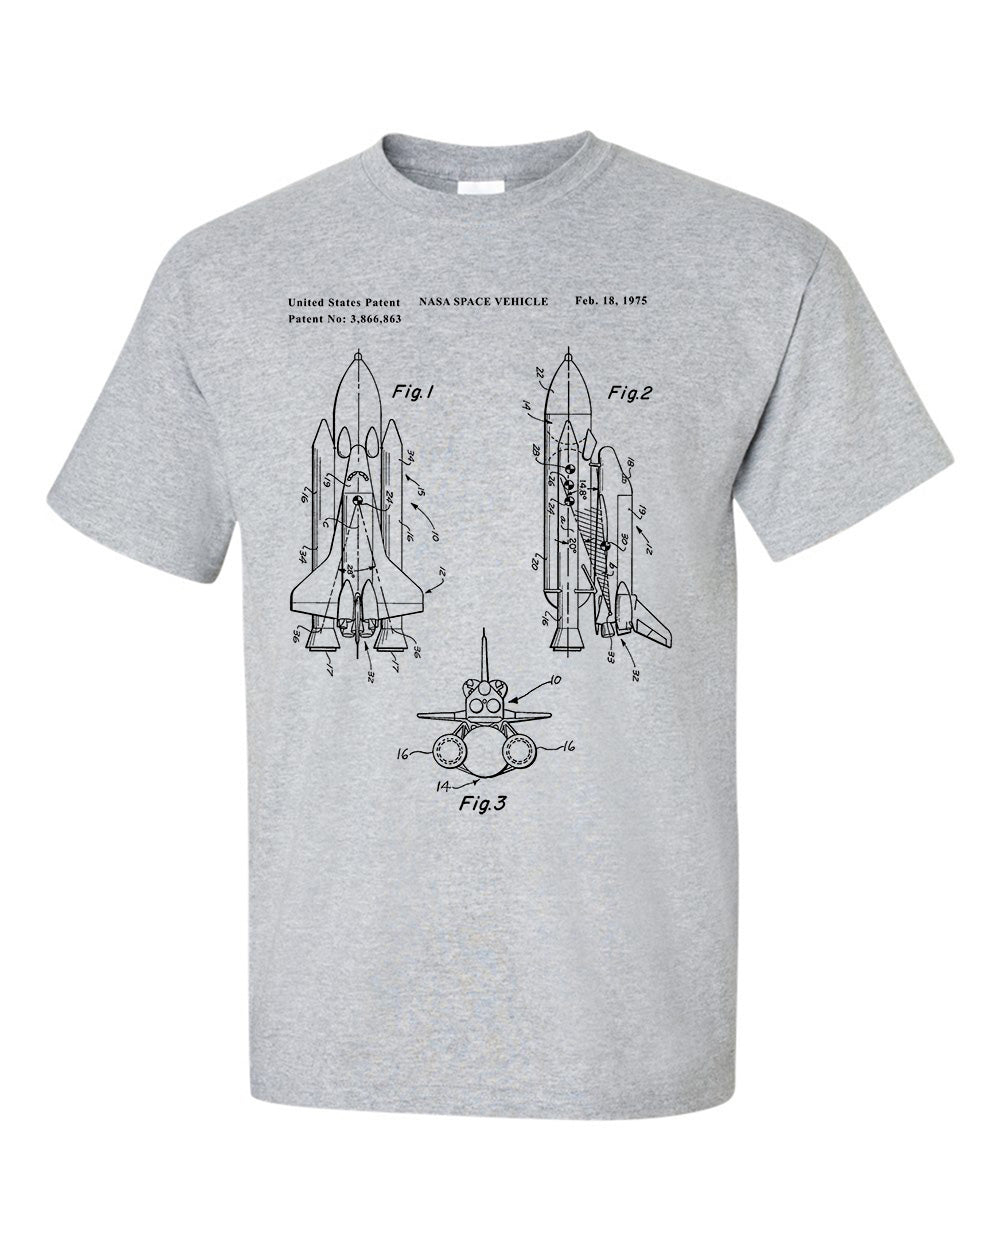 NASA Space Shuttle Patent T-Shirt